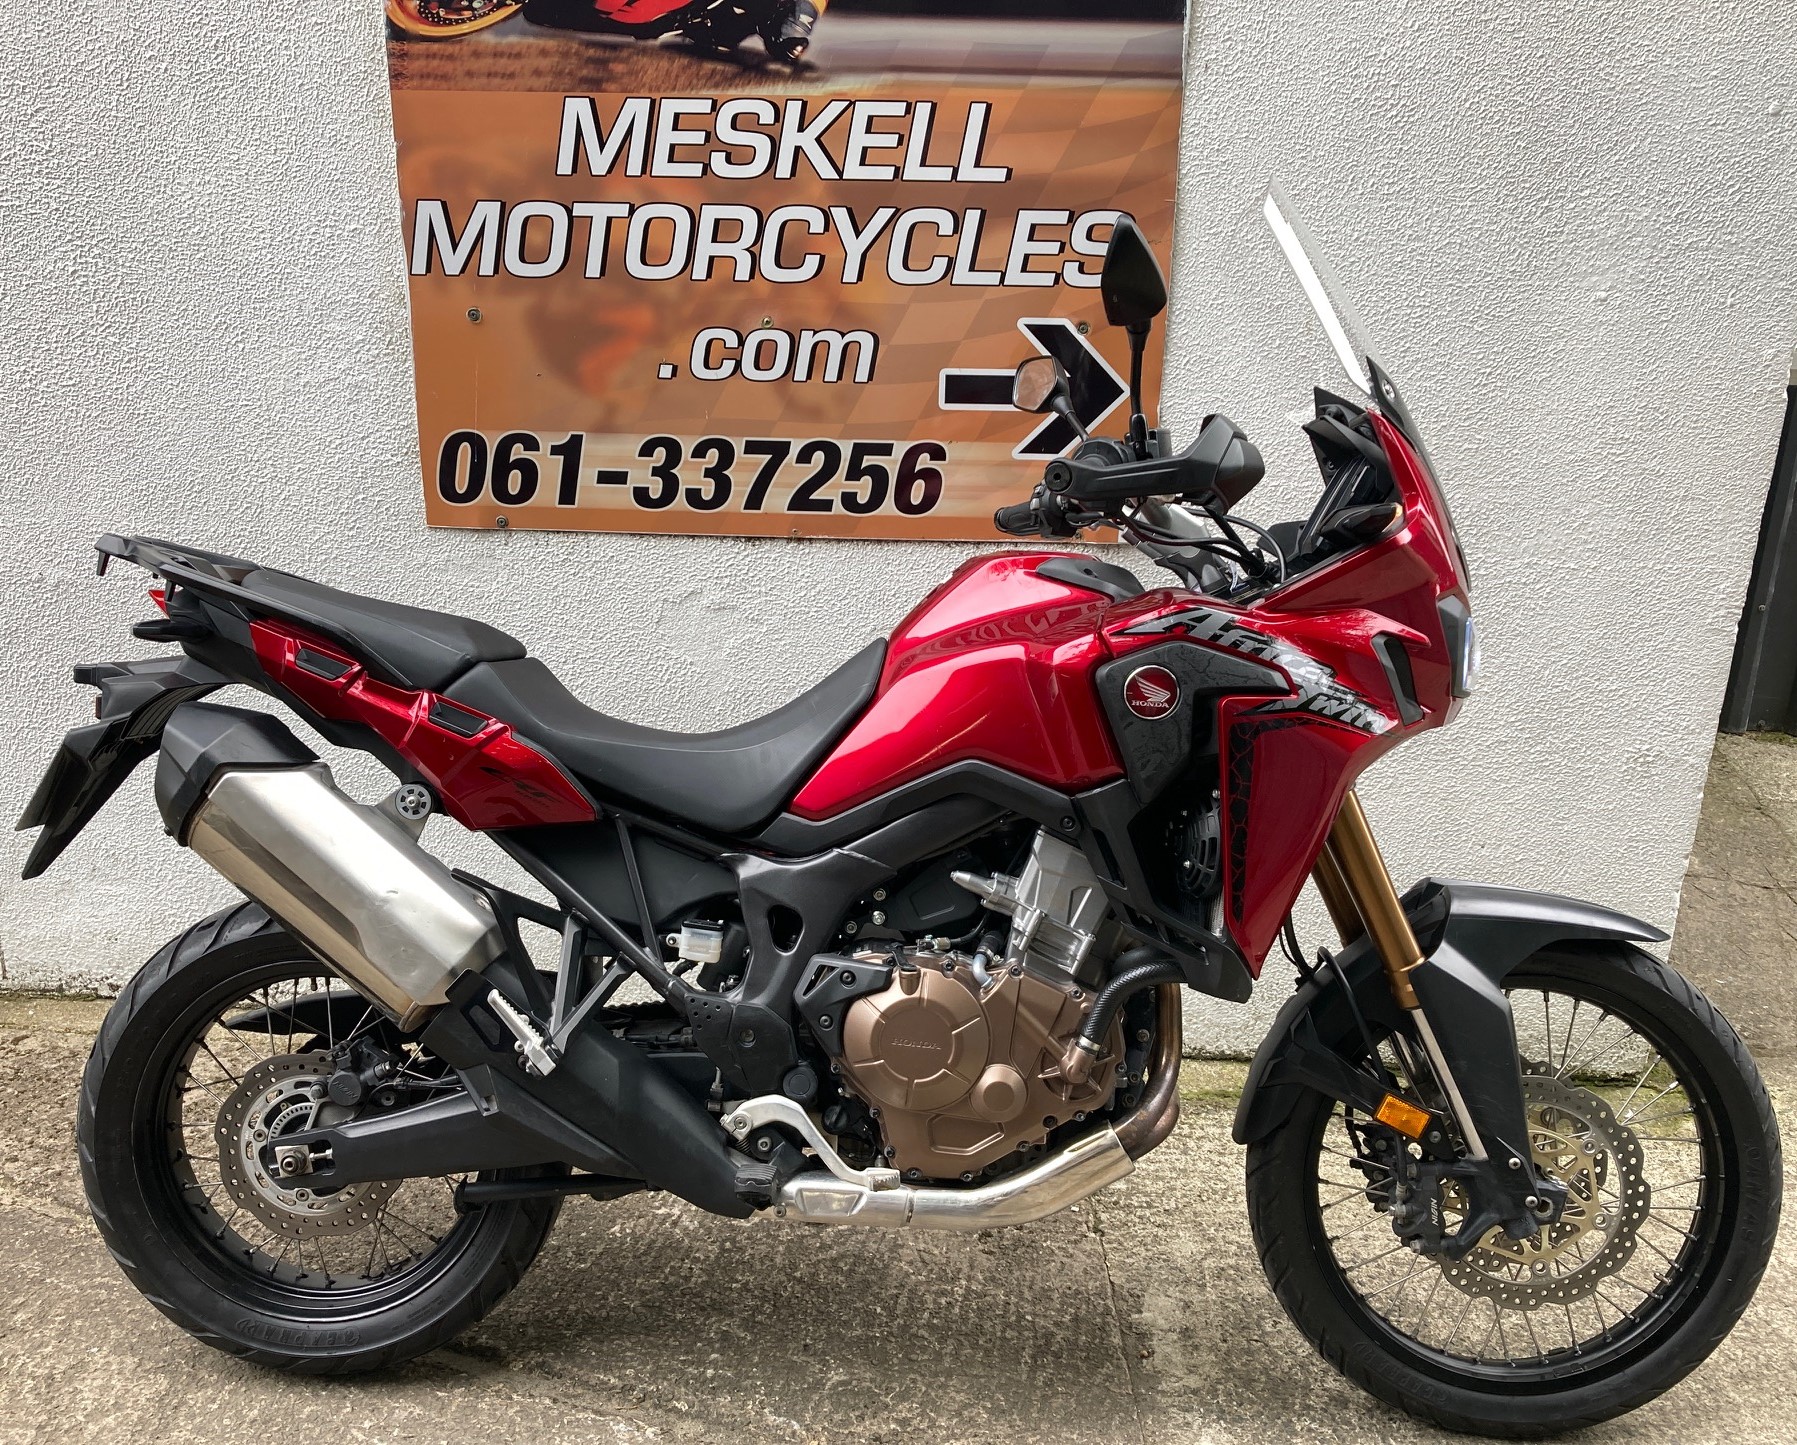 2019 Honda CRF 1000 Africa Twin Meskell Motorcycles